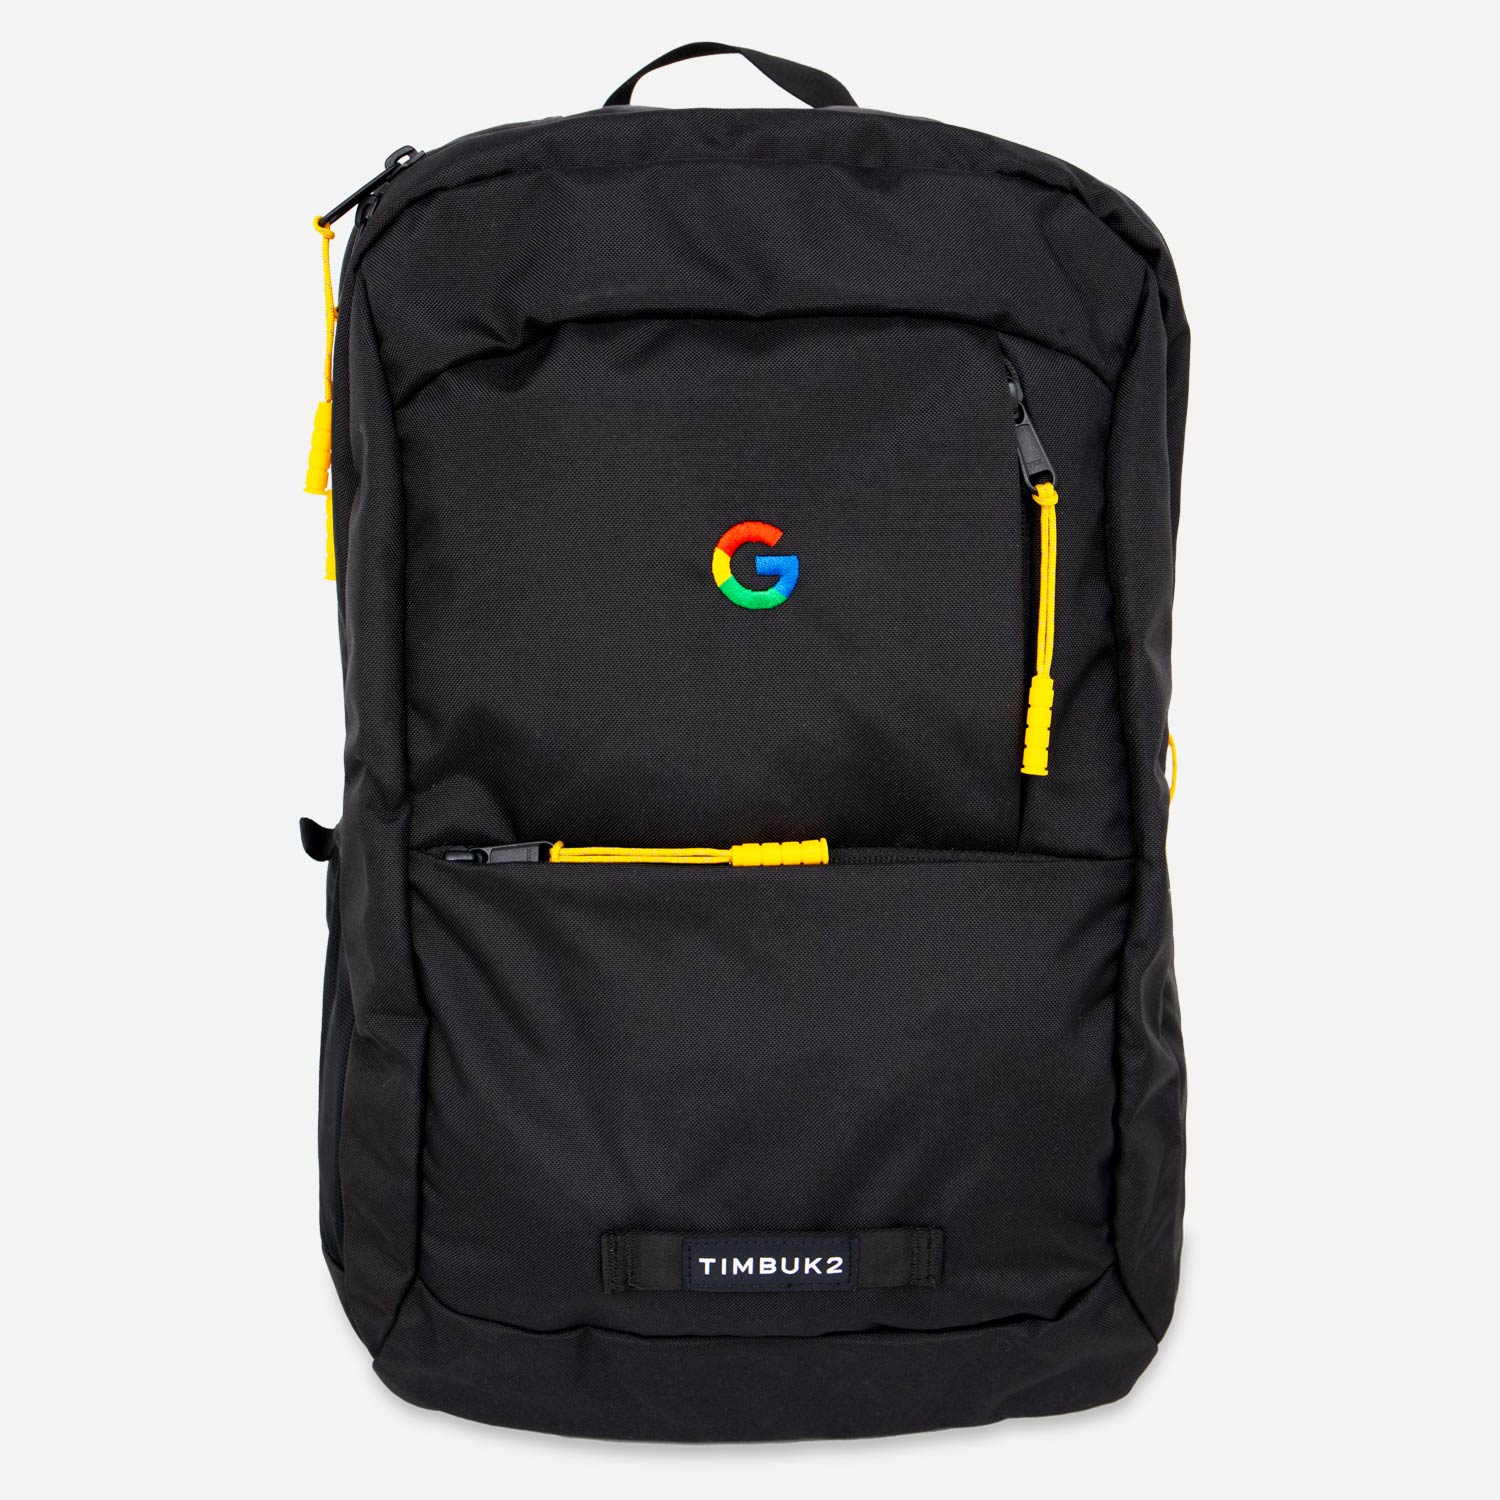 Super G Timbuk2 Recycled Backpack